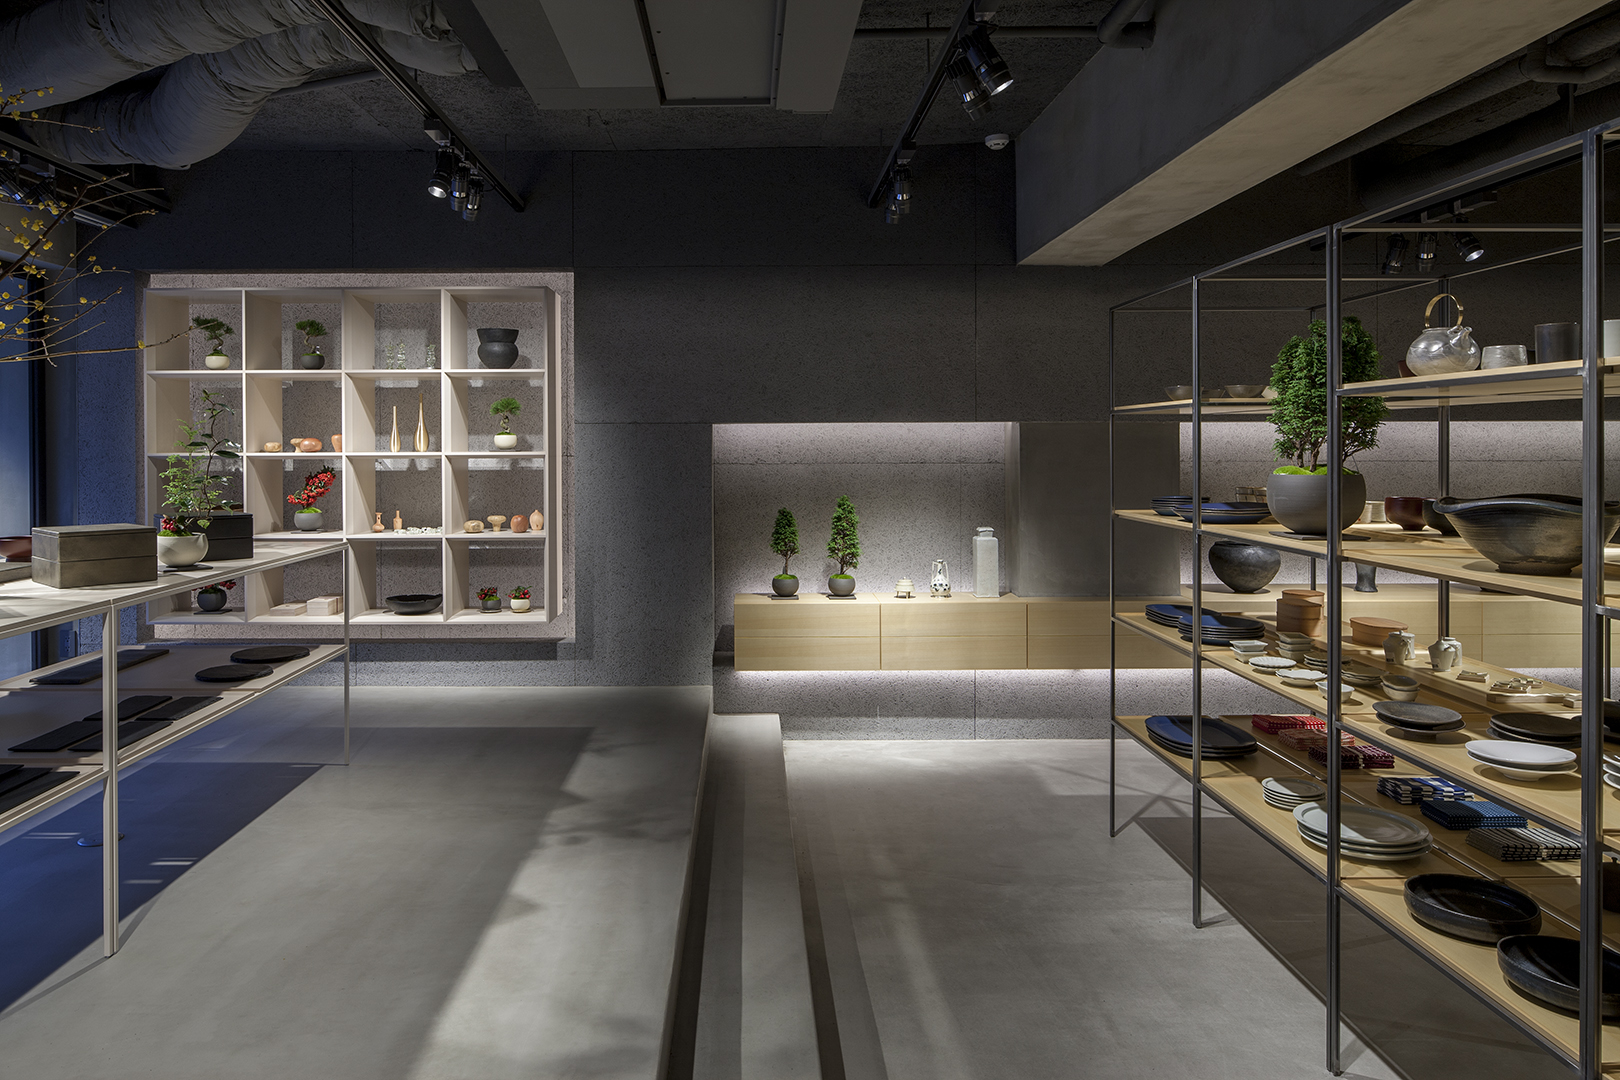 Tokyo's Best Interior Design and Tableware Shops - WHEN IN TOKYO